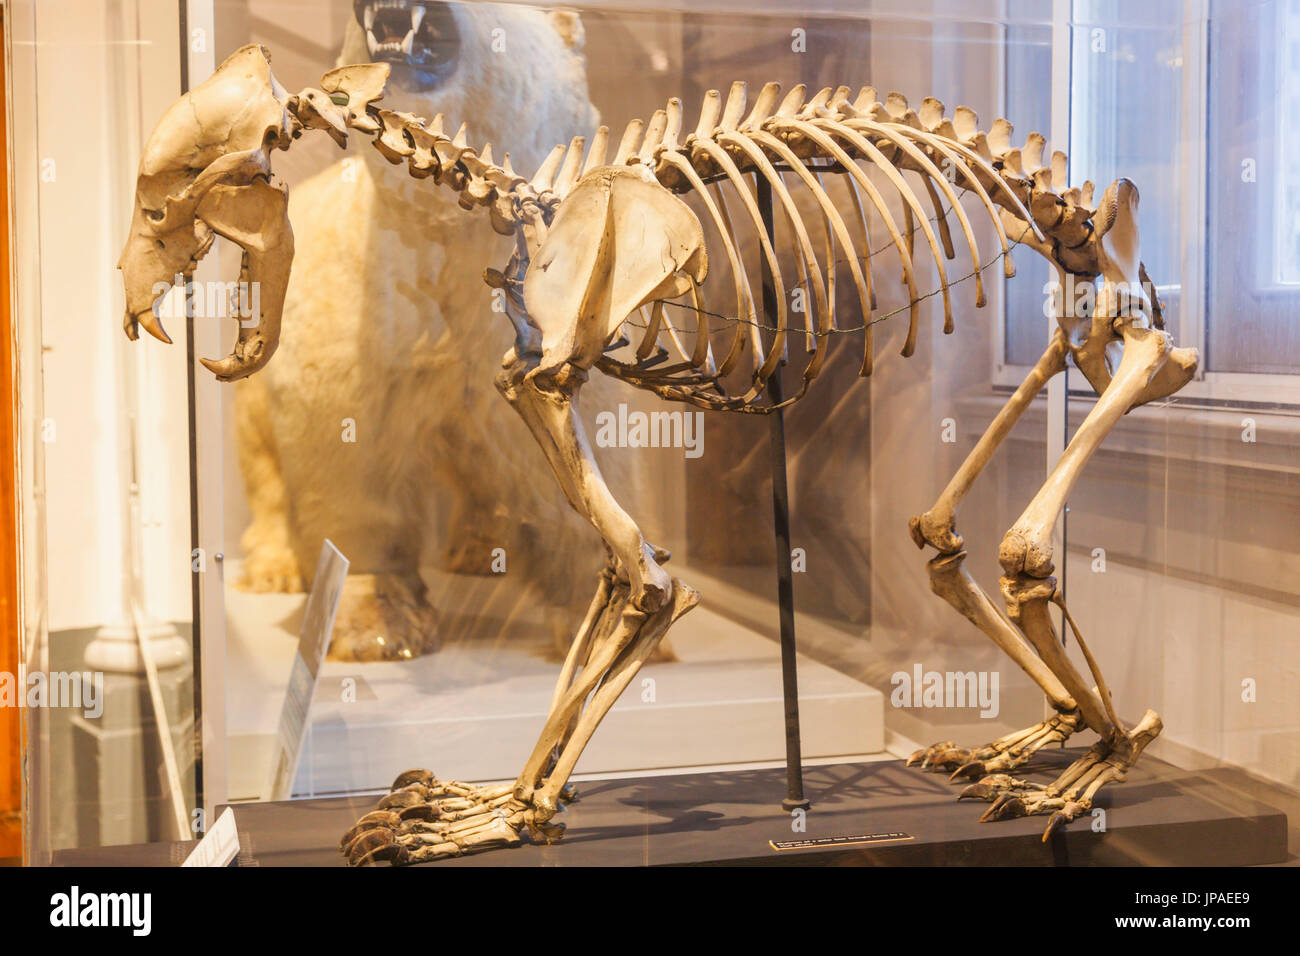 England, East Yorkshire, Kingston upon Hull, The Maritime Museum, Exhibit of Polar Bear Skeleton Stock Photo